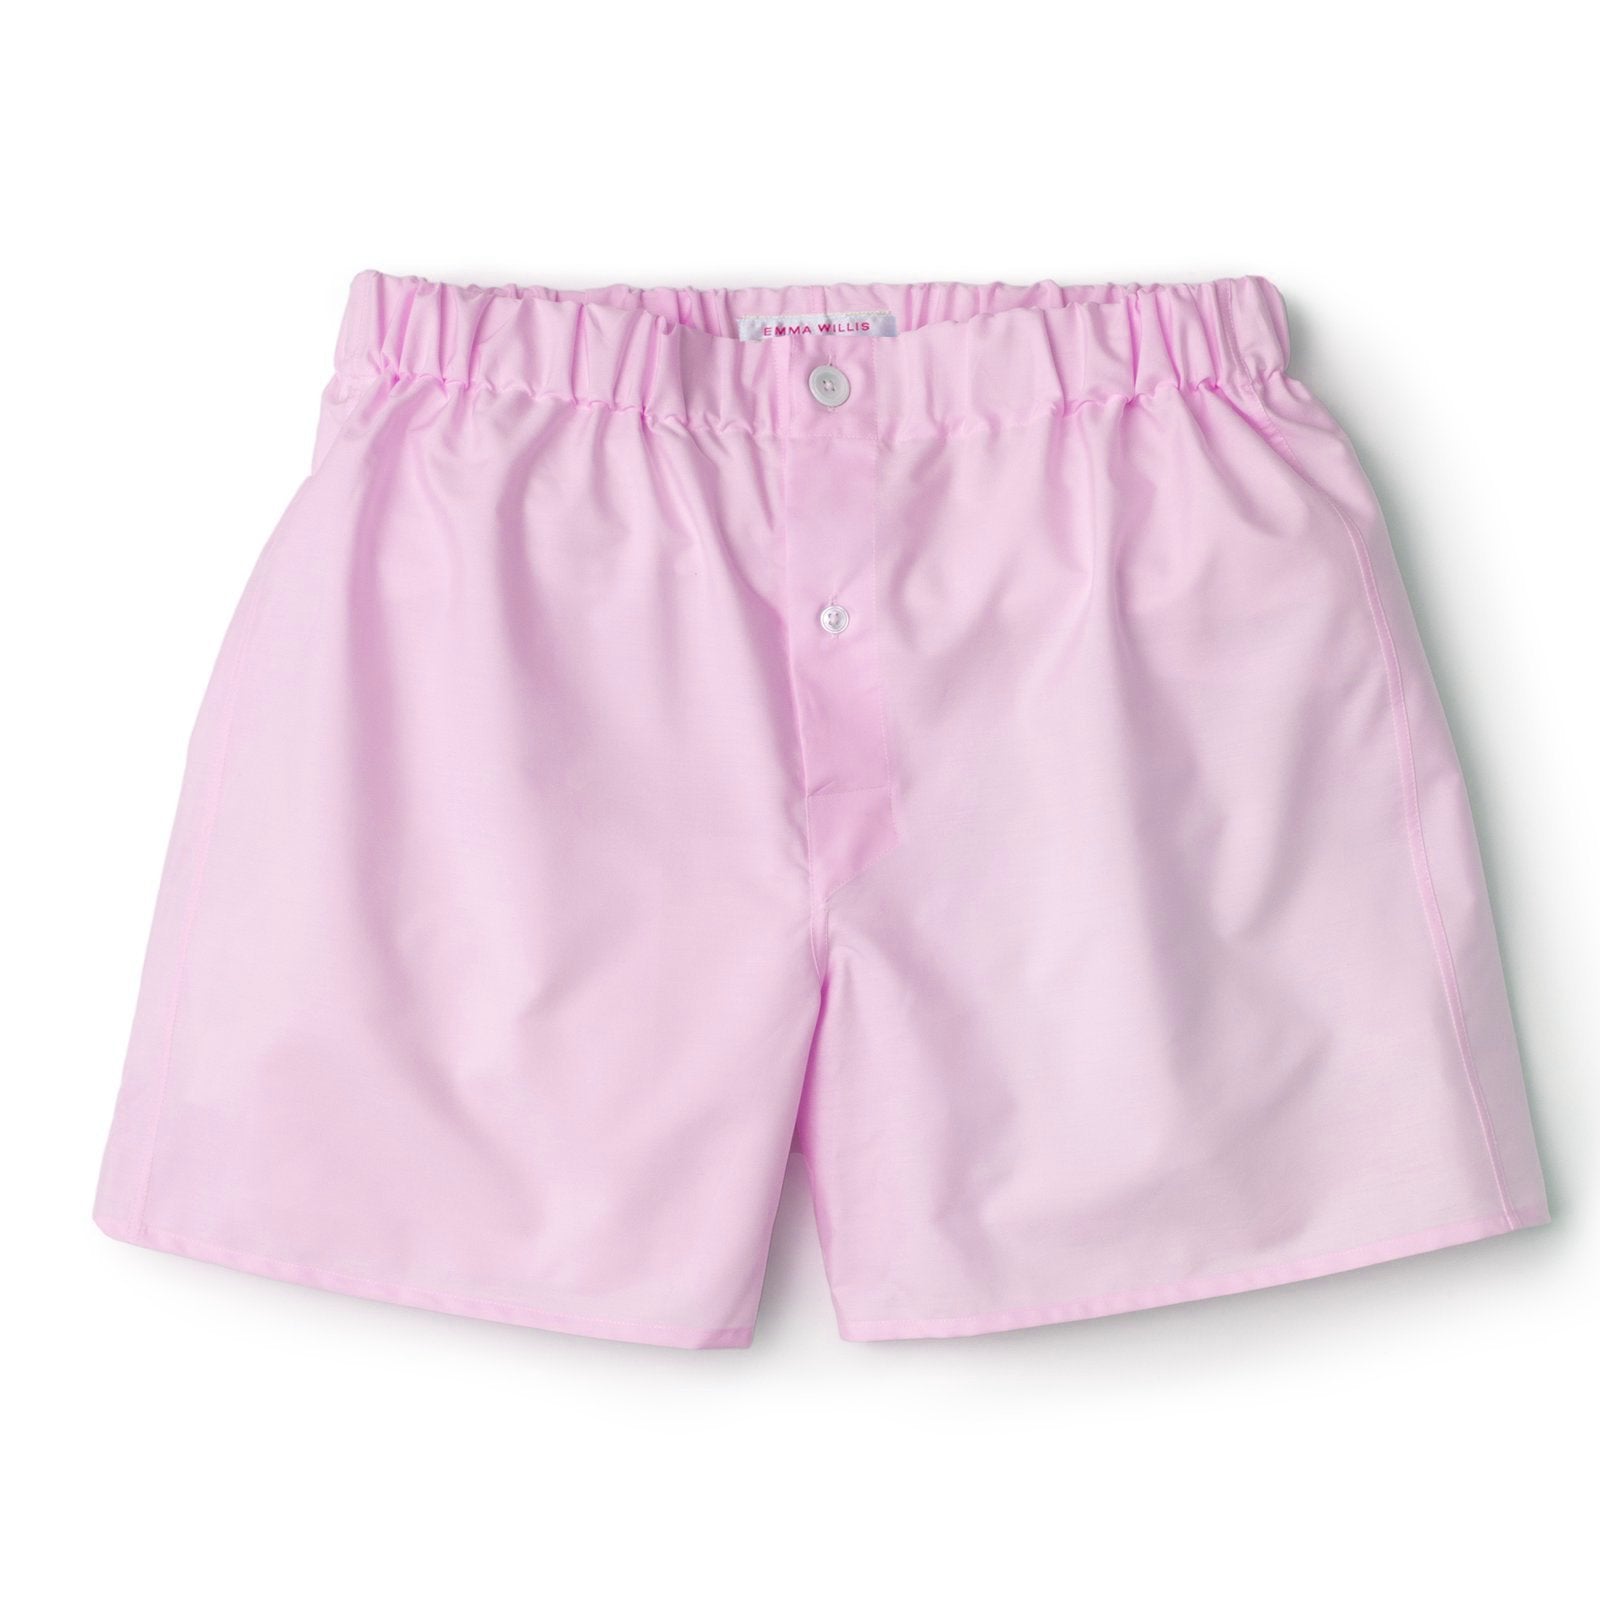 Pink Superior Cotton Boxer Shorts - Slim Fit - New freeshipping - Emma Willis